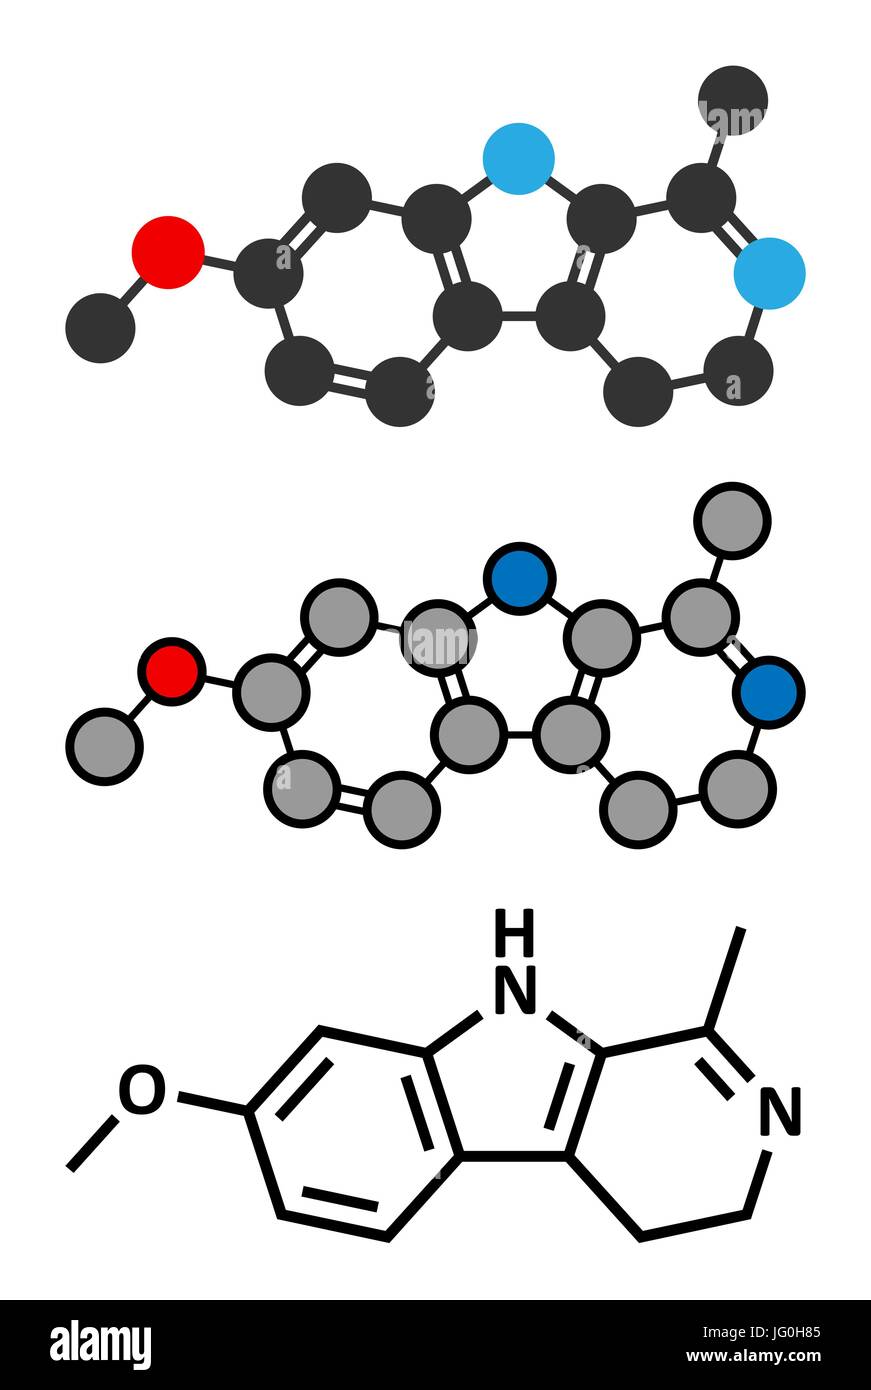 Harmaline indole alkaloid molecule. Found in Syrian rue (Peganum harmala). Conventional skeletal formula and stylized representations. Stock Vector